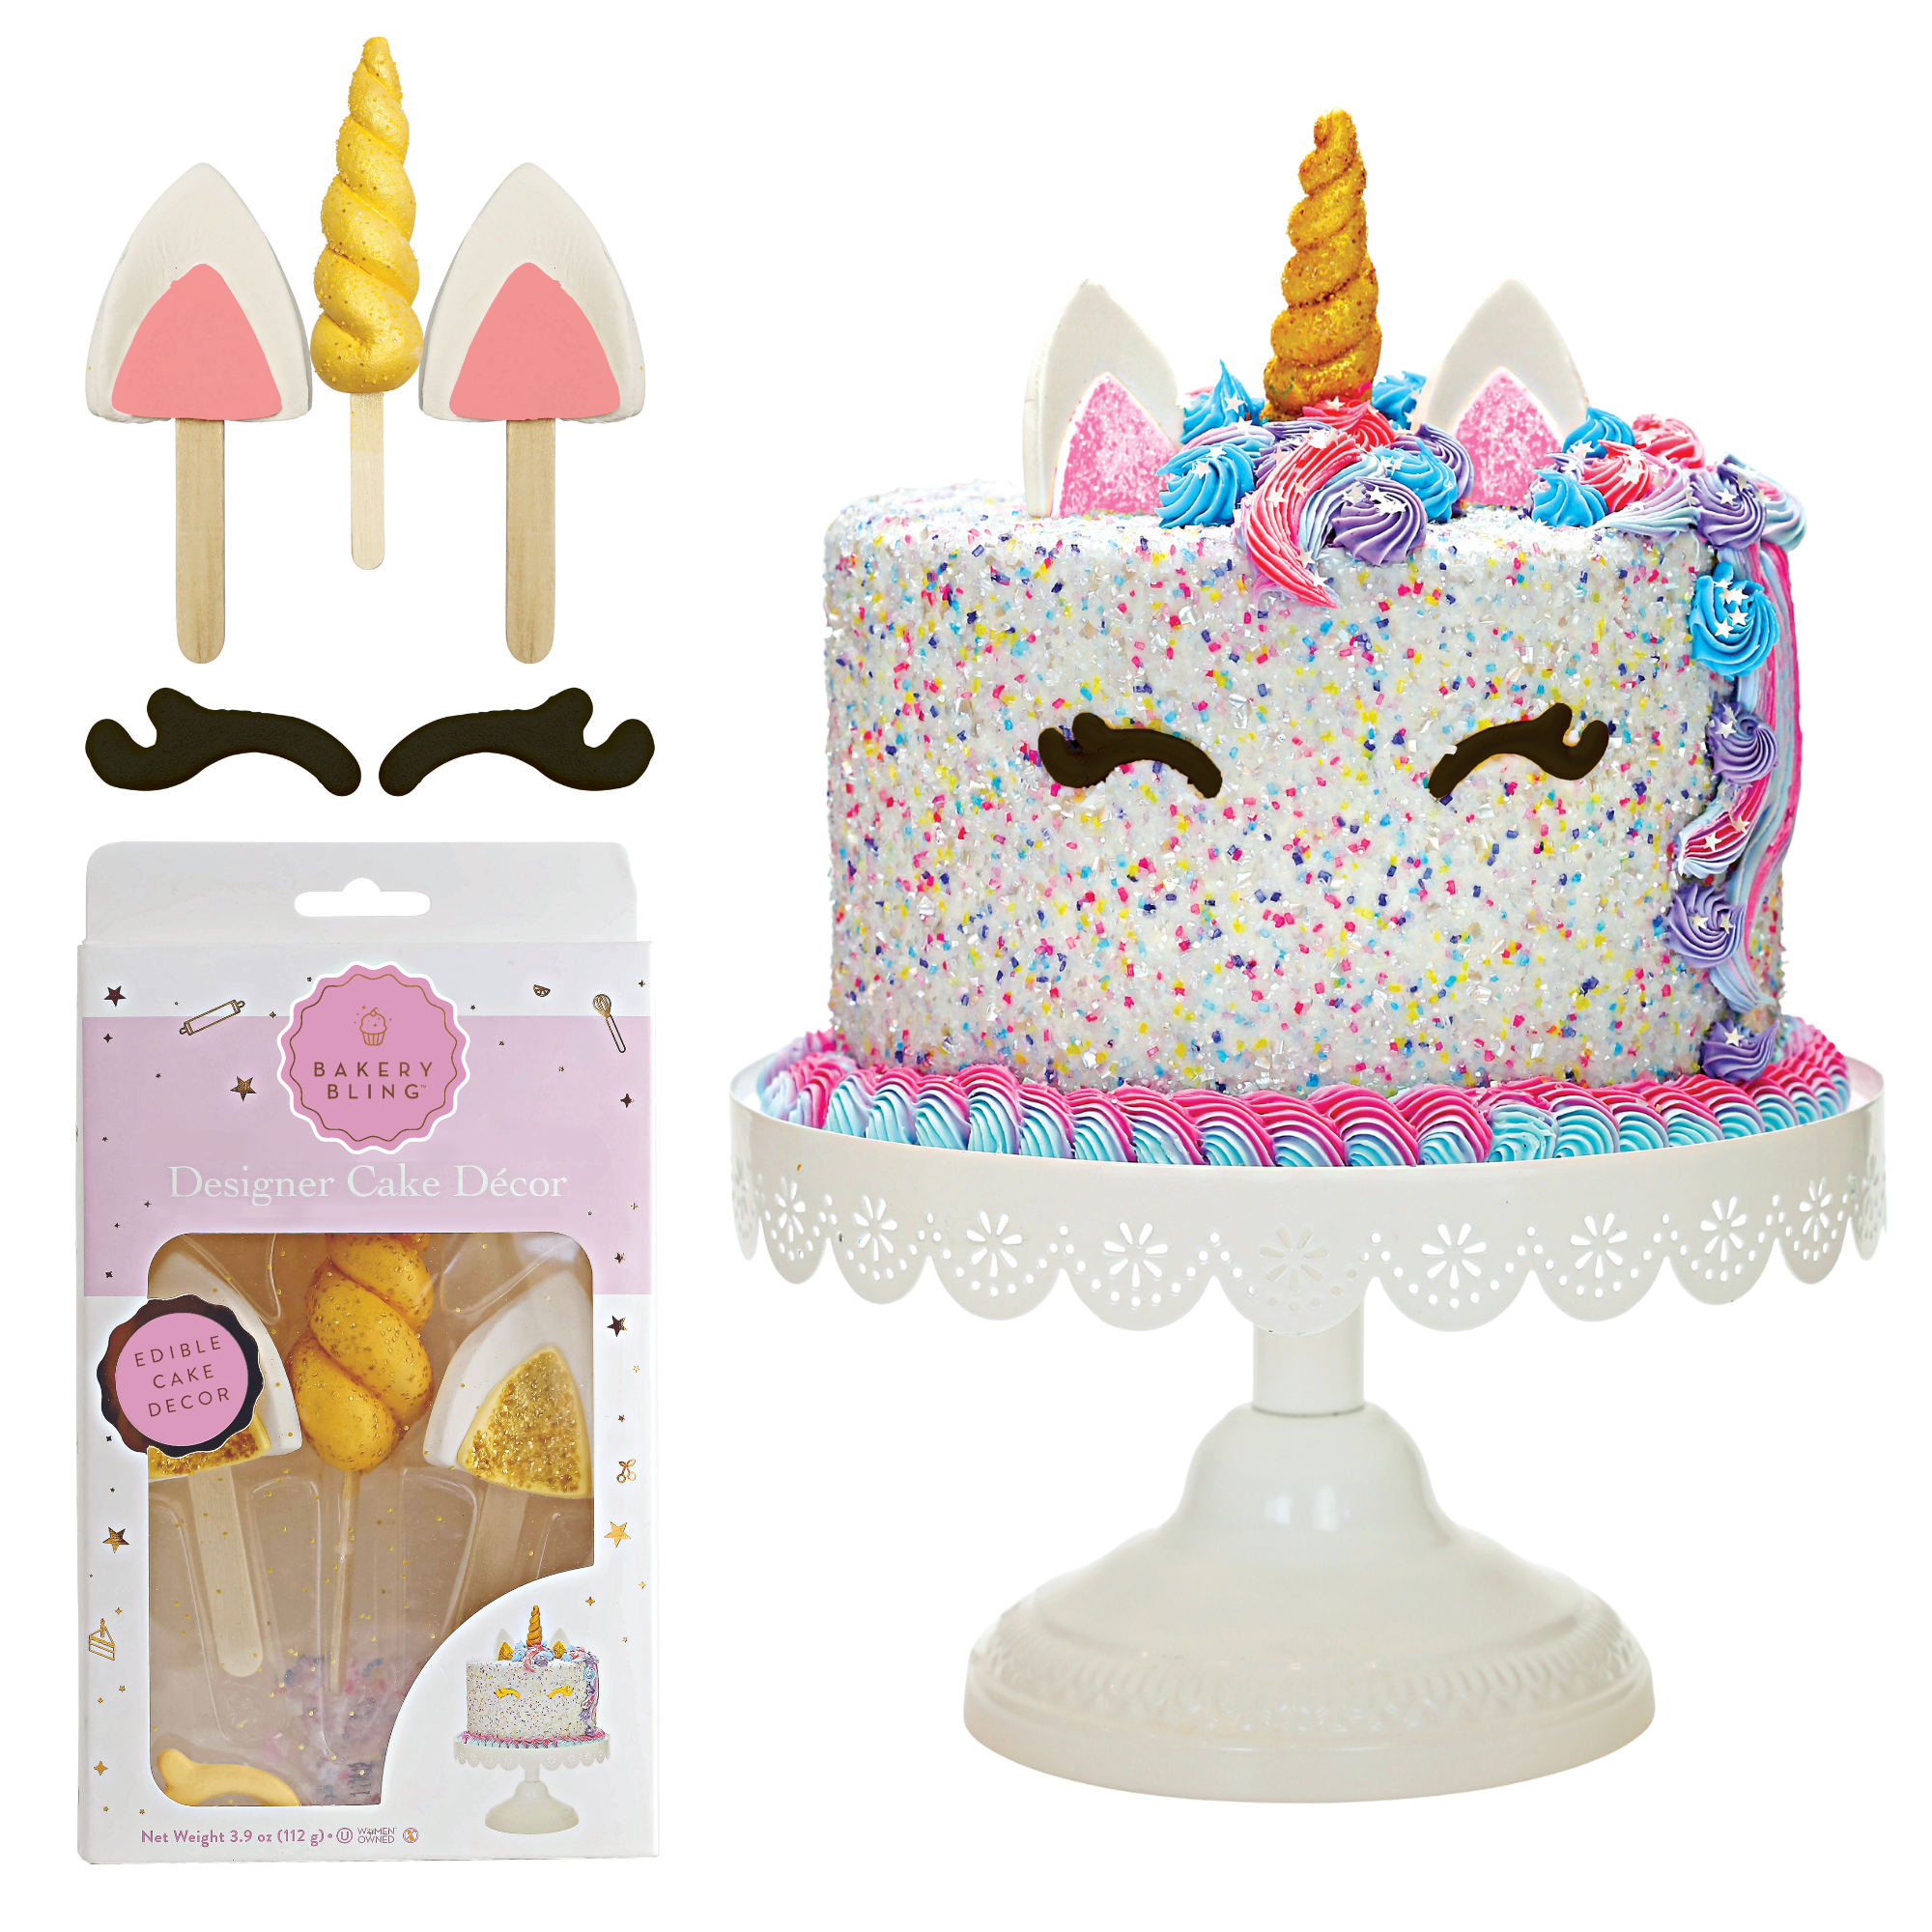 Unicorn Designer Decorating Bundle (Designer Cake, Cupcake Decor & Glittery Sugar)